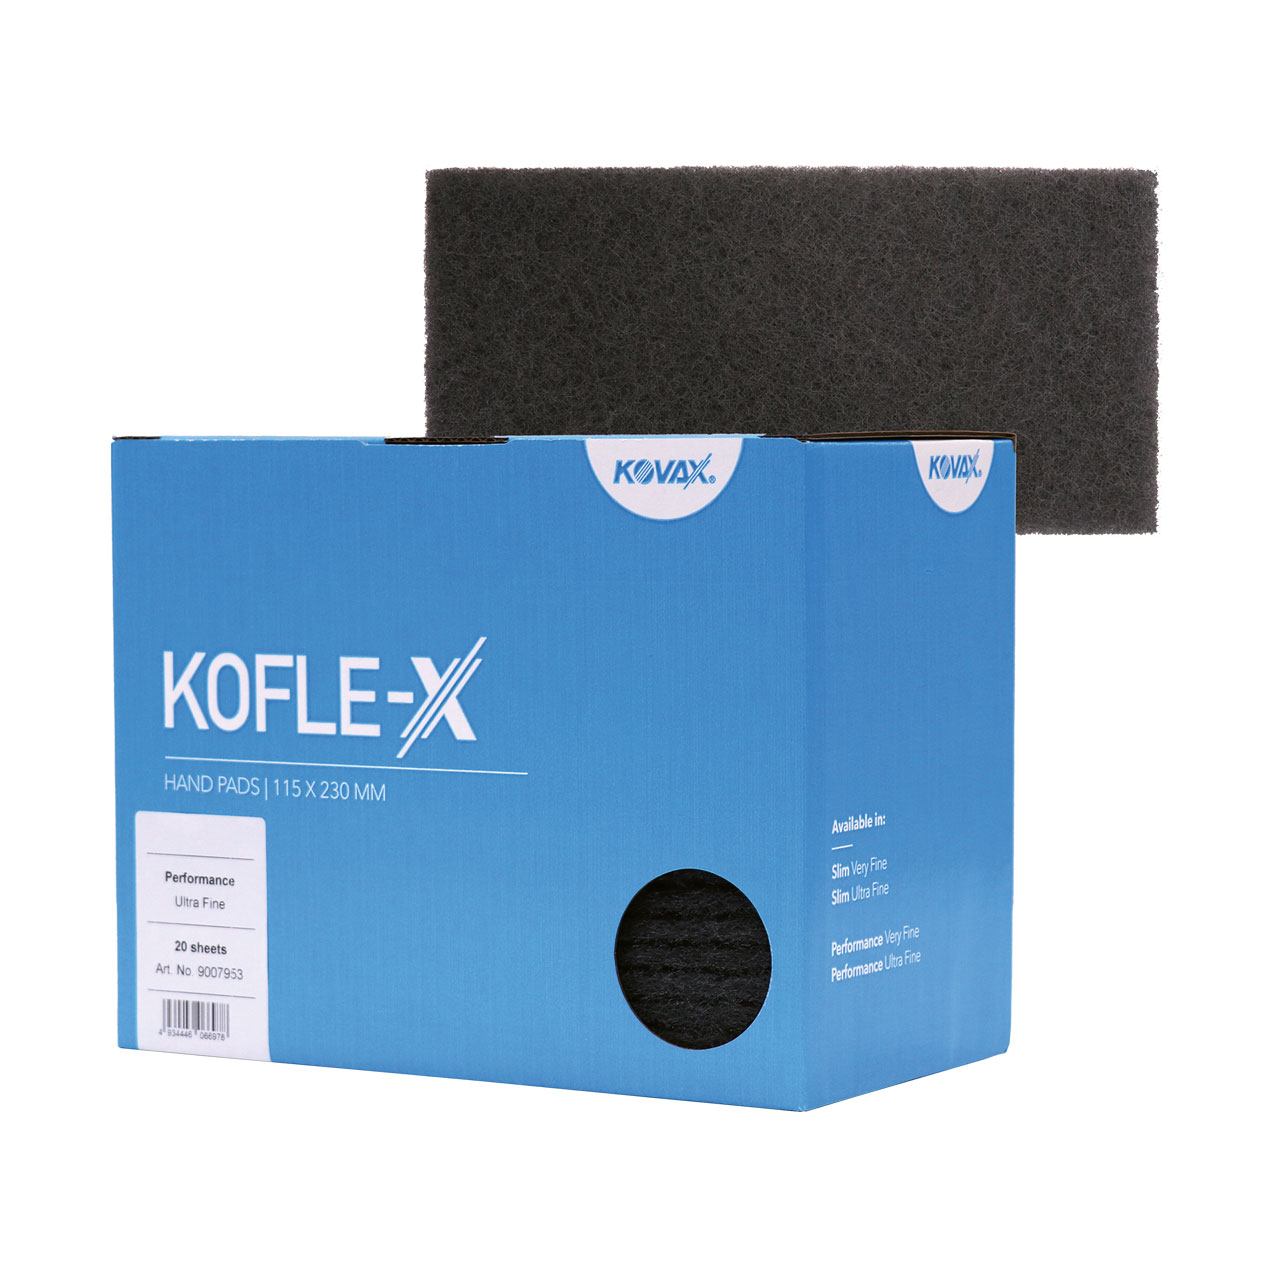 Kovax Kofle-X Performance Handpads, Grau, 115 x 230 mm, Ultrafein